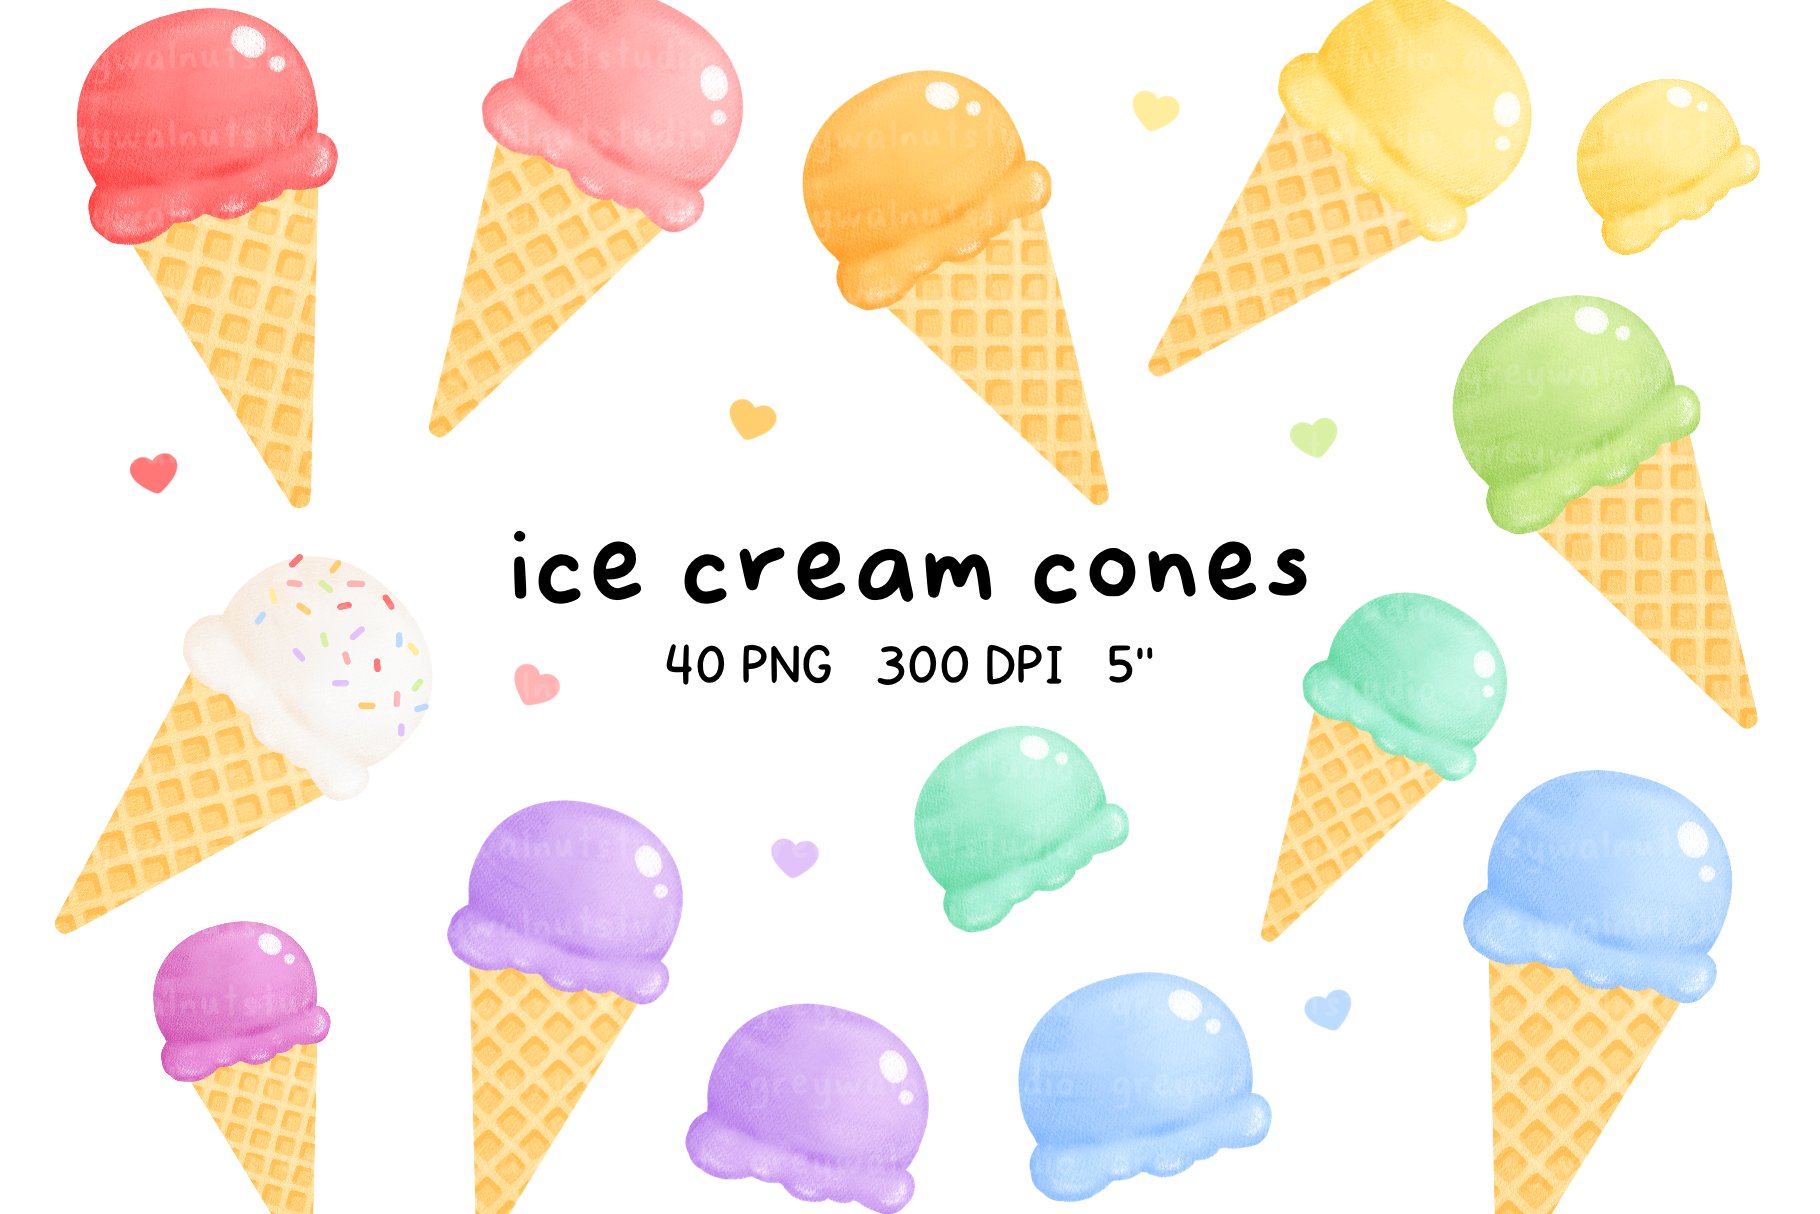 Ice Cream Cones Clipart cover image.